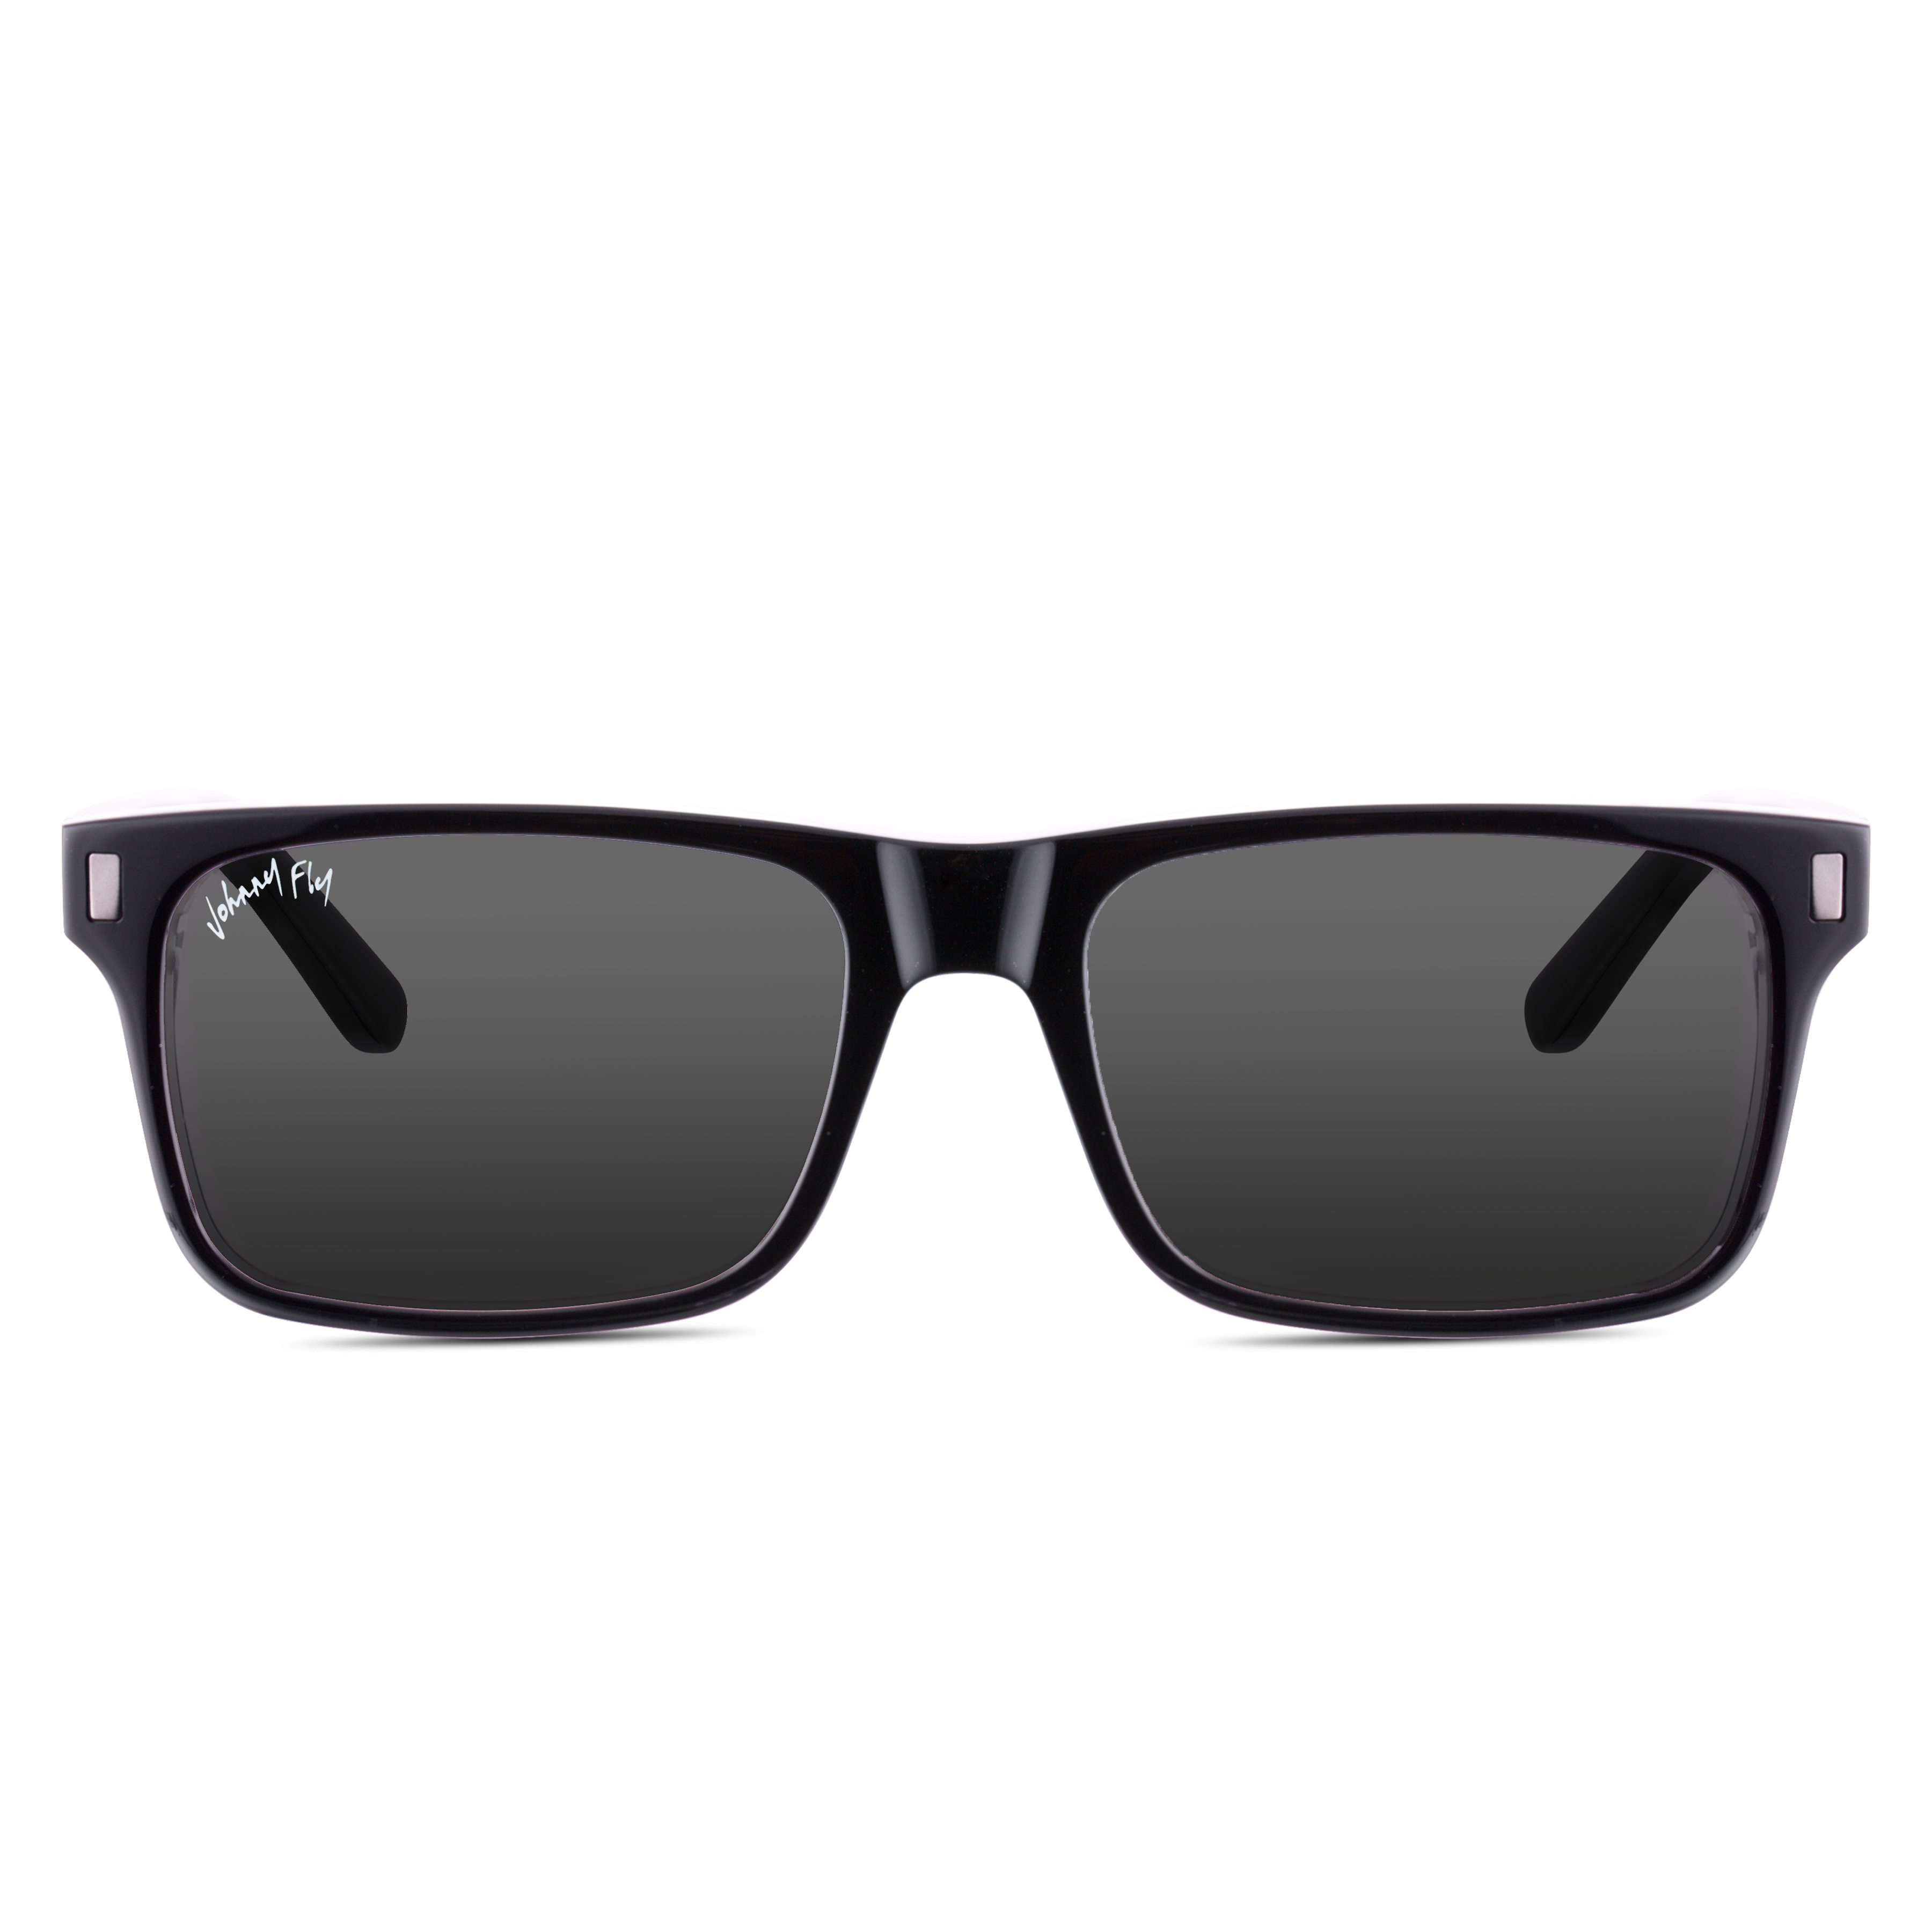 7FIFTY7 - Black Crystal - Sunglasses - Johnny Fly Eyewear | #color_black-crystal